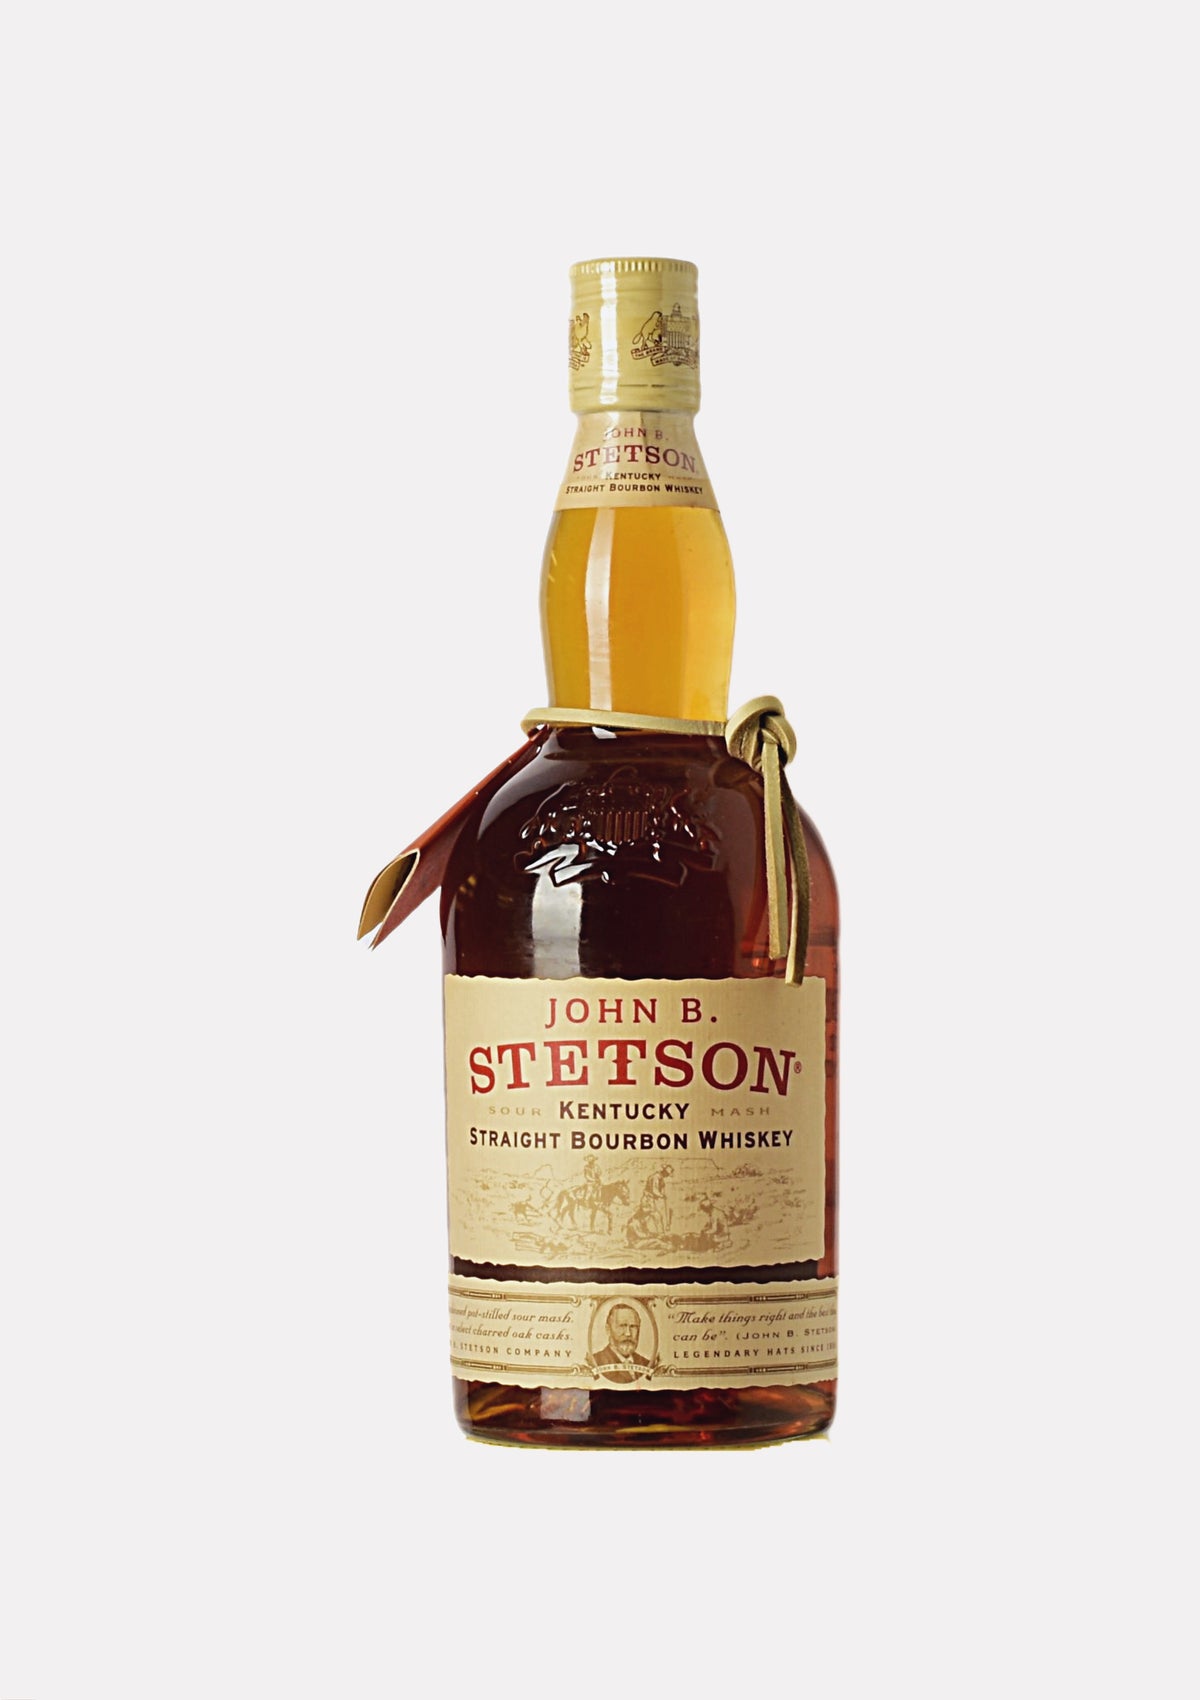 John B. Stetson Kentucky Straight Bourbon Whiskey